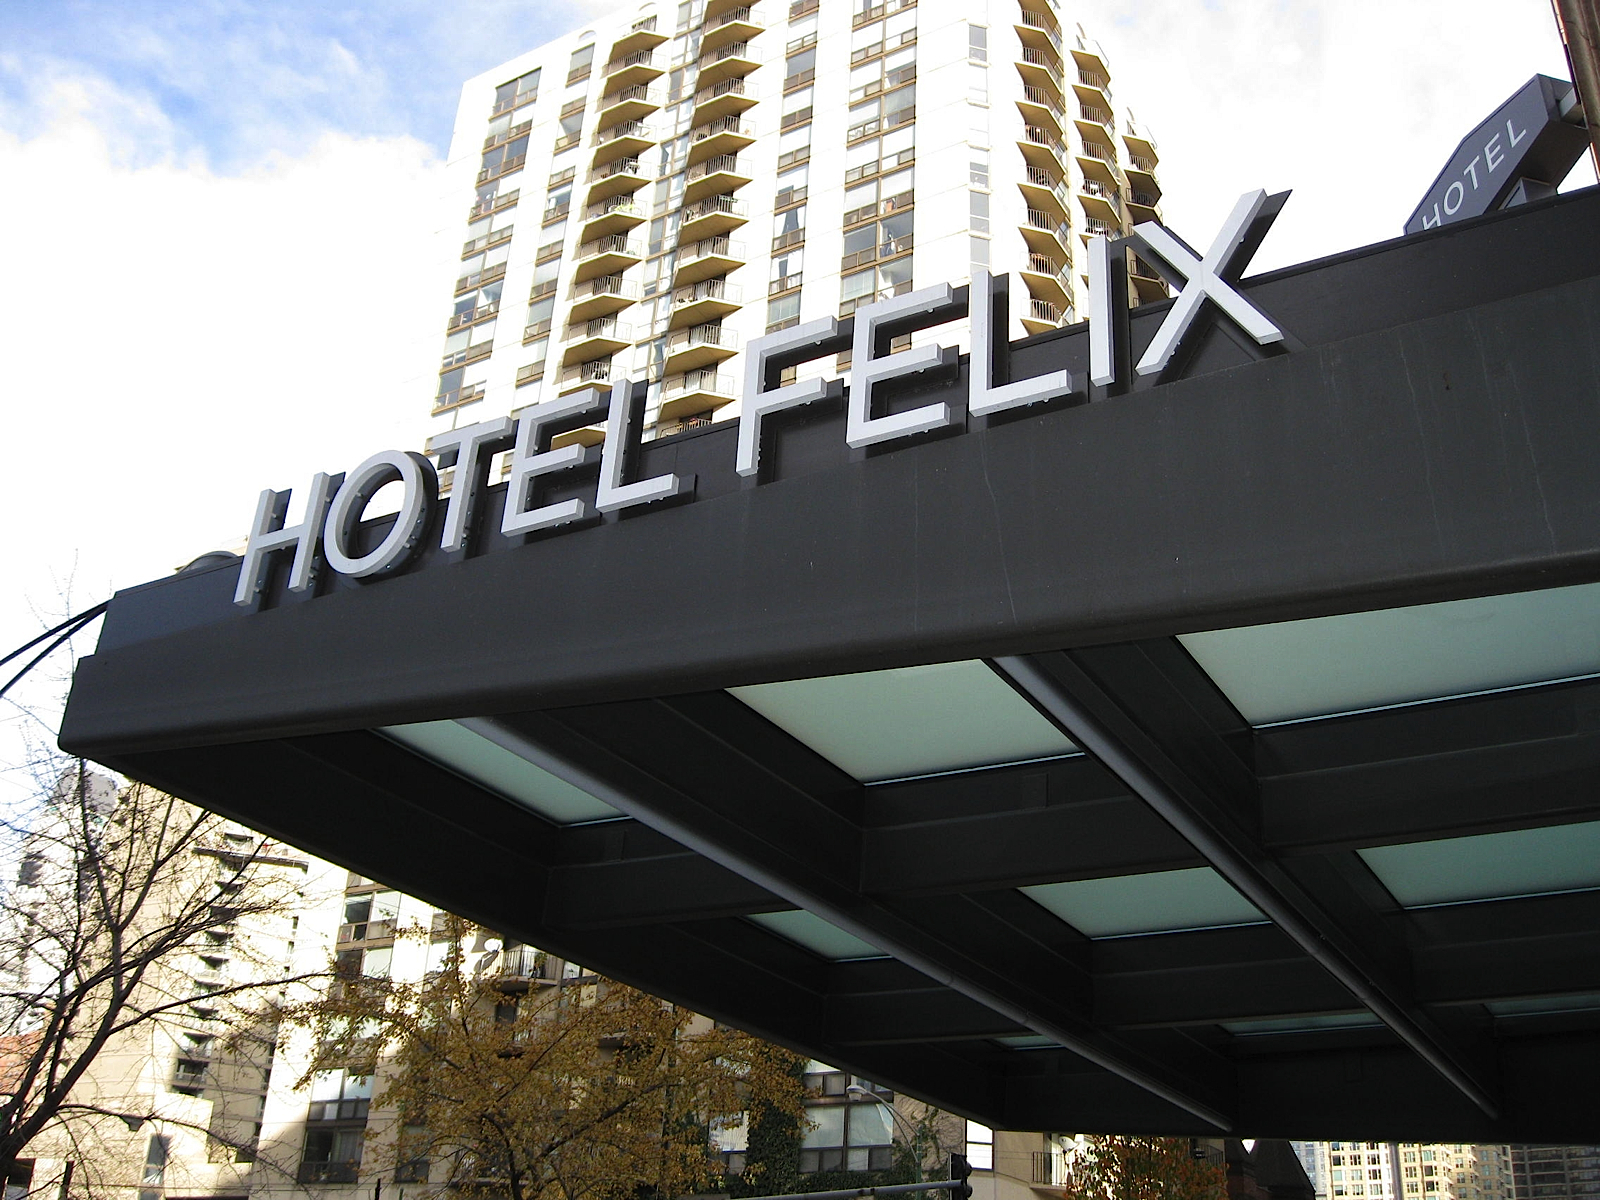 Photo of Hotel Felix Chicago, Chicago, IL